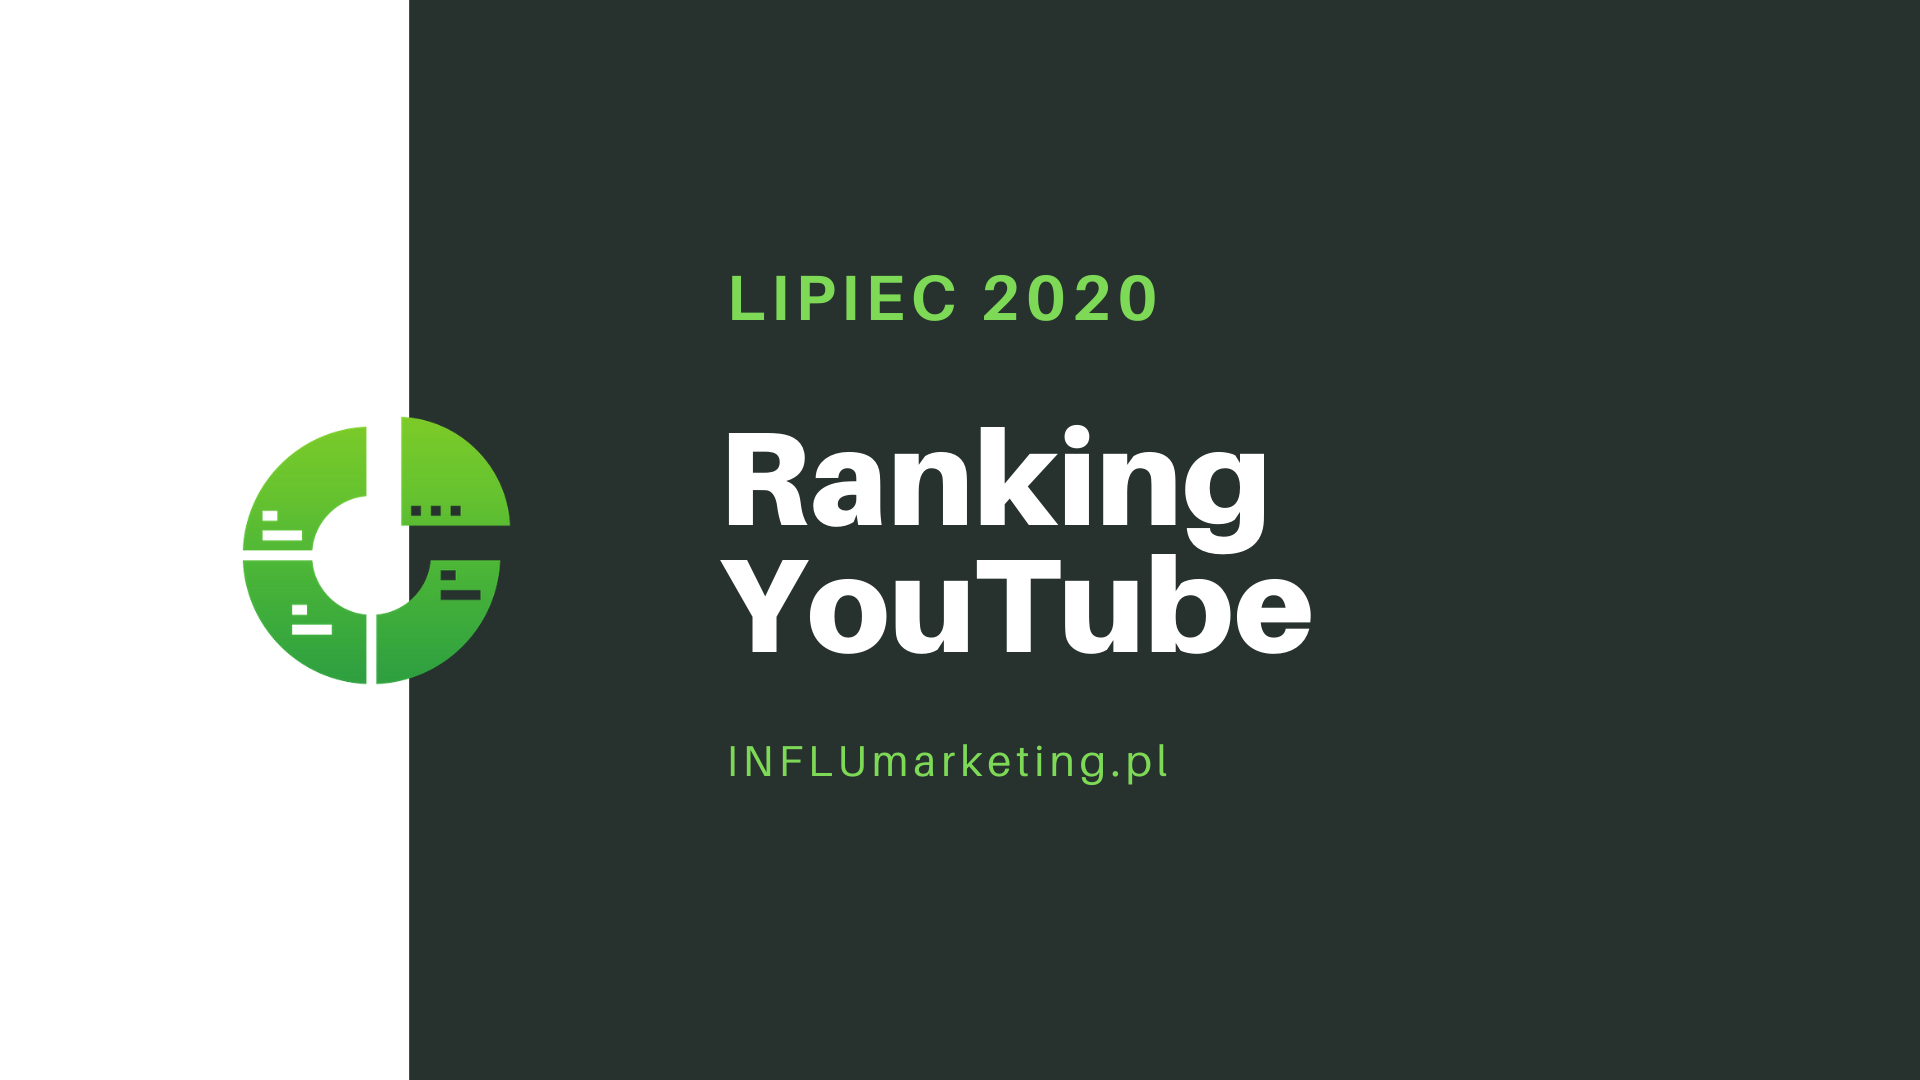 ranking youtube polska lipiec 2020 cover photo